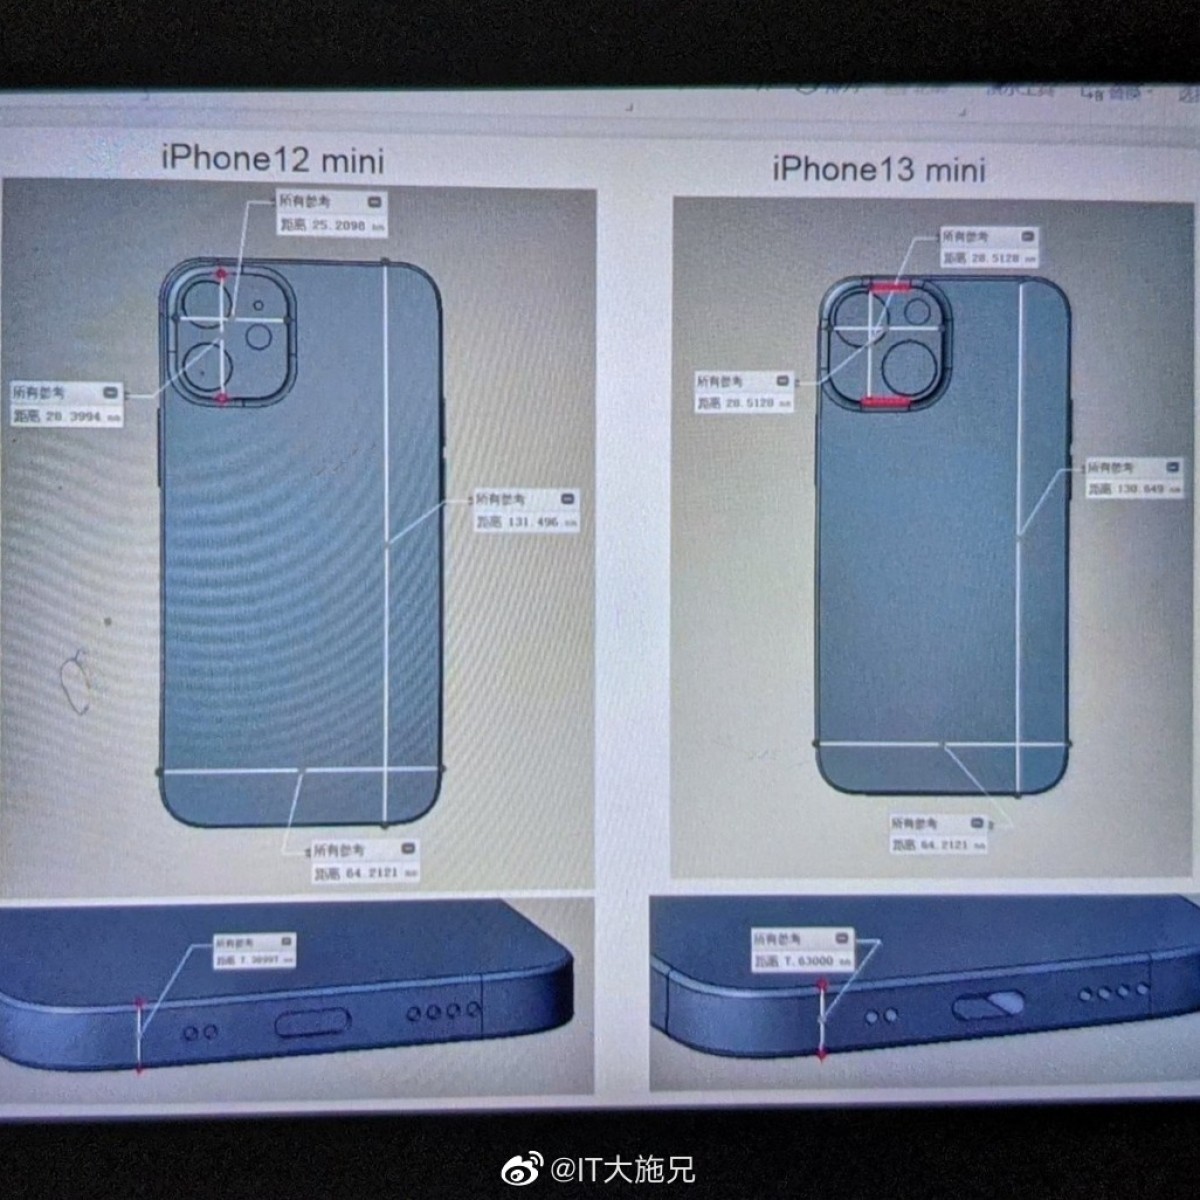 Apple iPhone 13 mini leak suggests new dual camera module - GSMArena.com  news